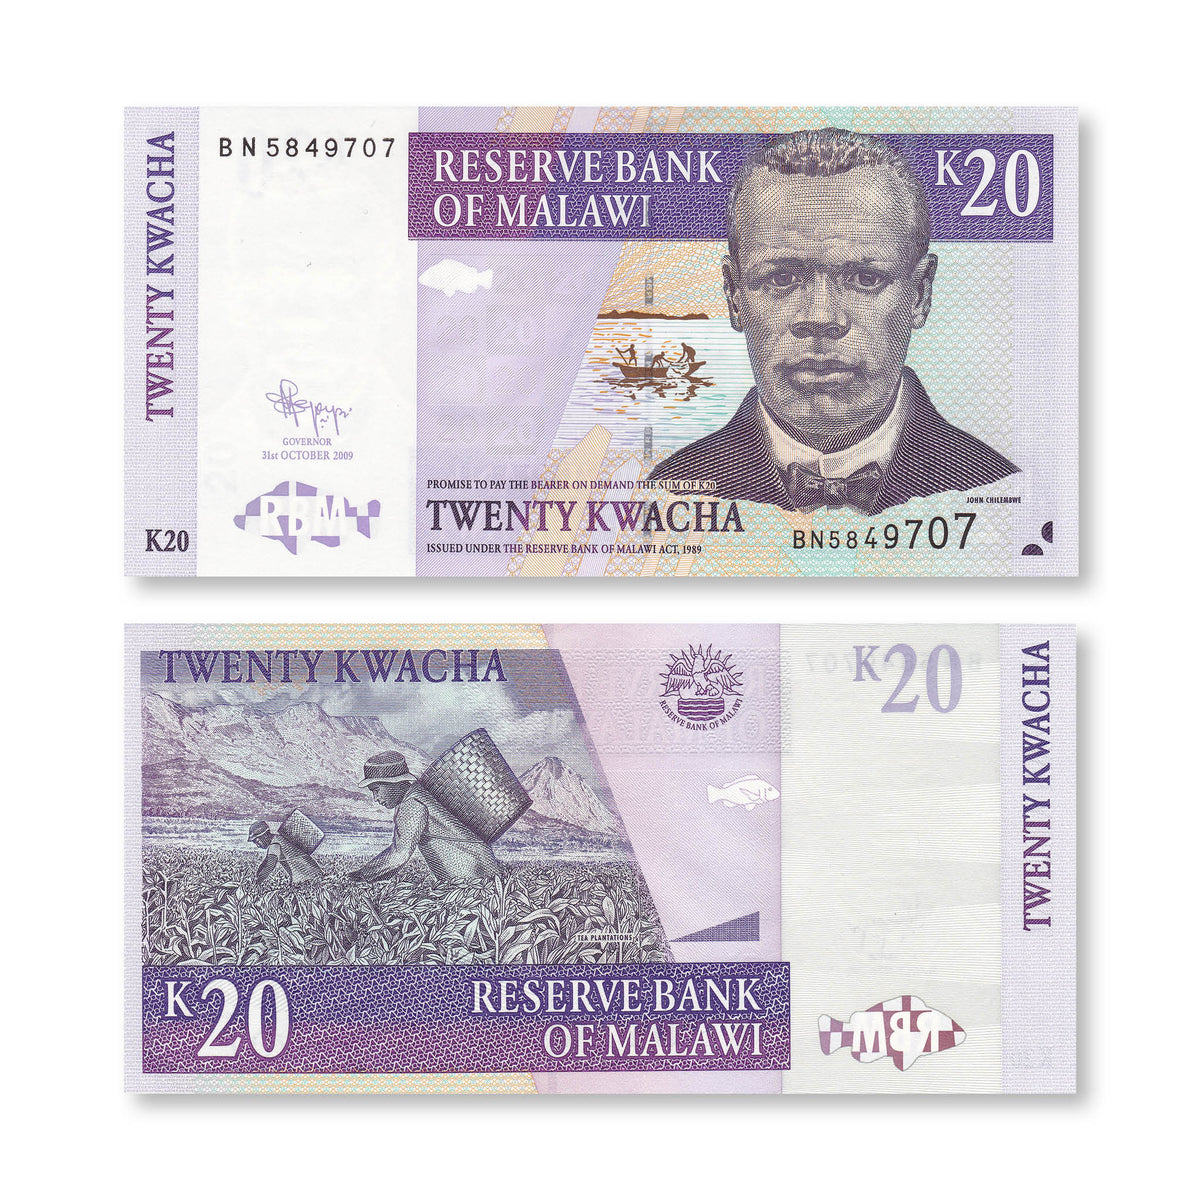 Malawi 20 Kwacha, 2009, B143f, P52d, UNC - Robert's World Money - World Banknotes